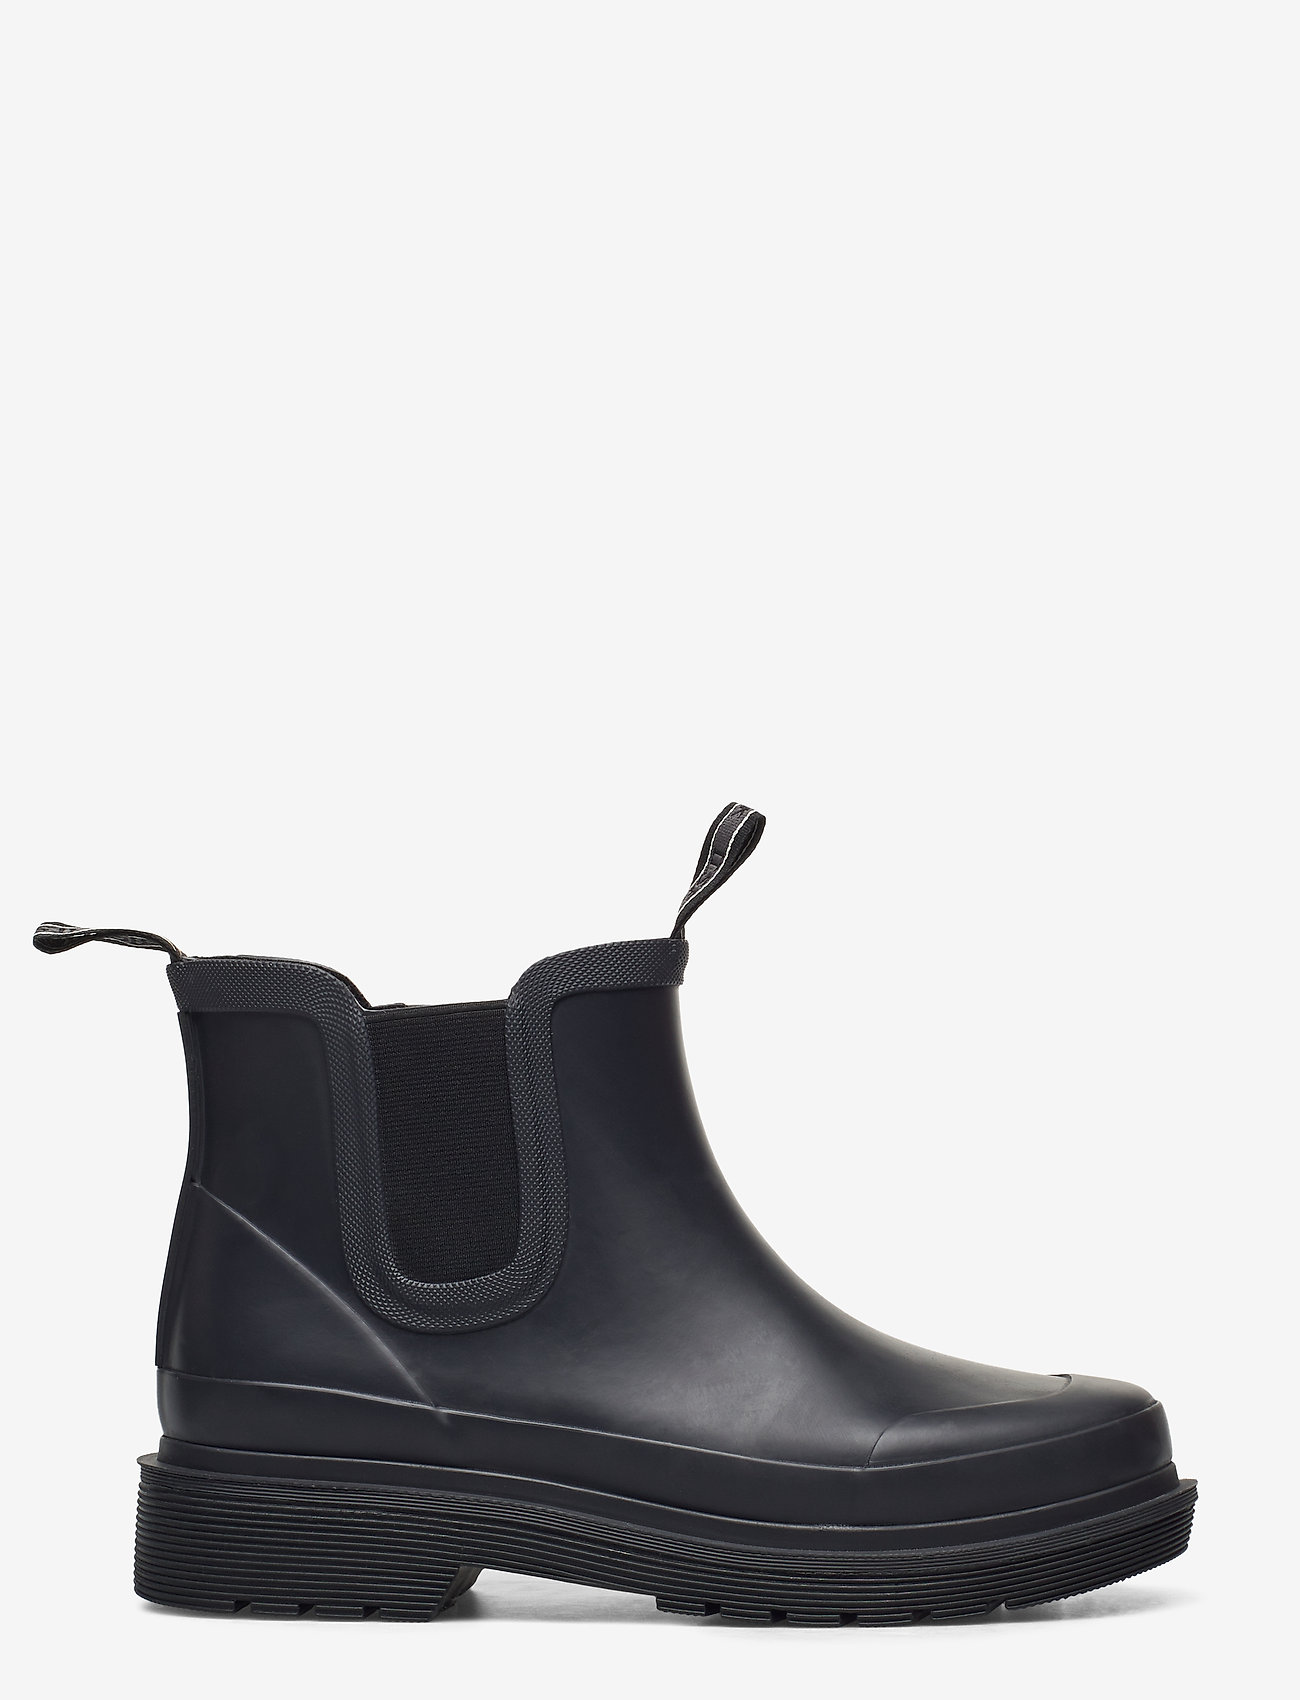 Ilse Jacobsen - Rubber boots ankel - naised - black - 1